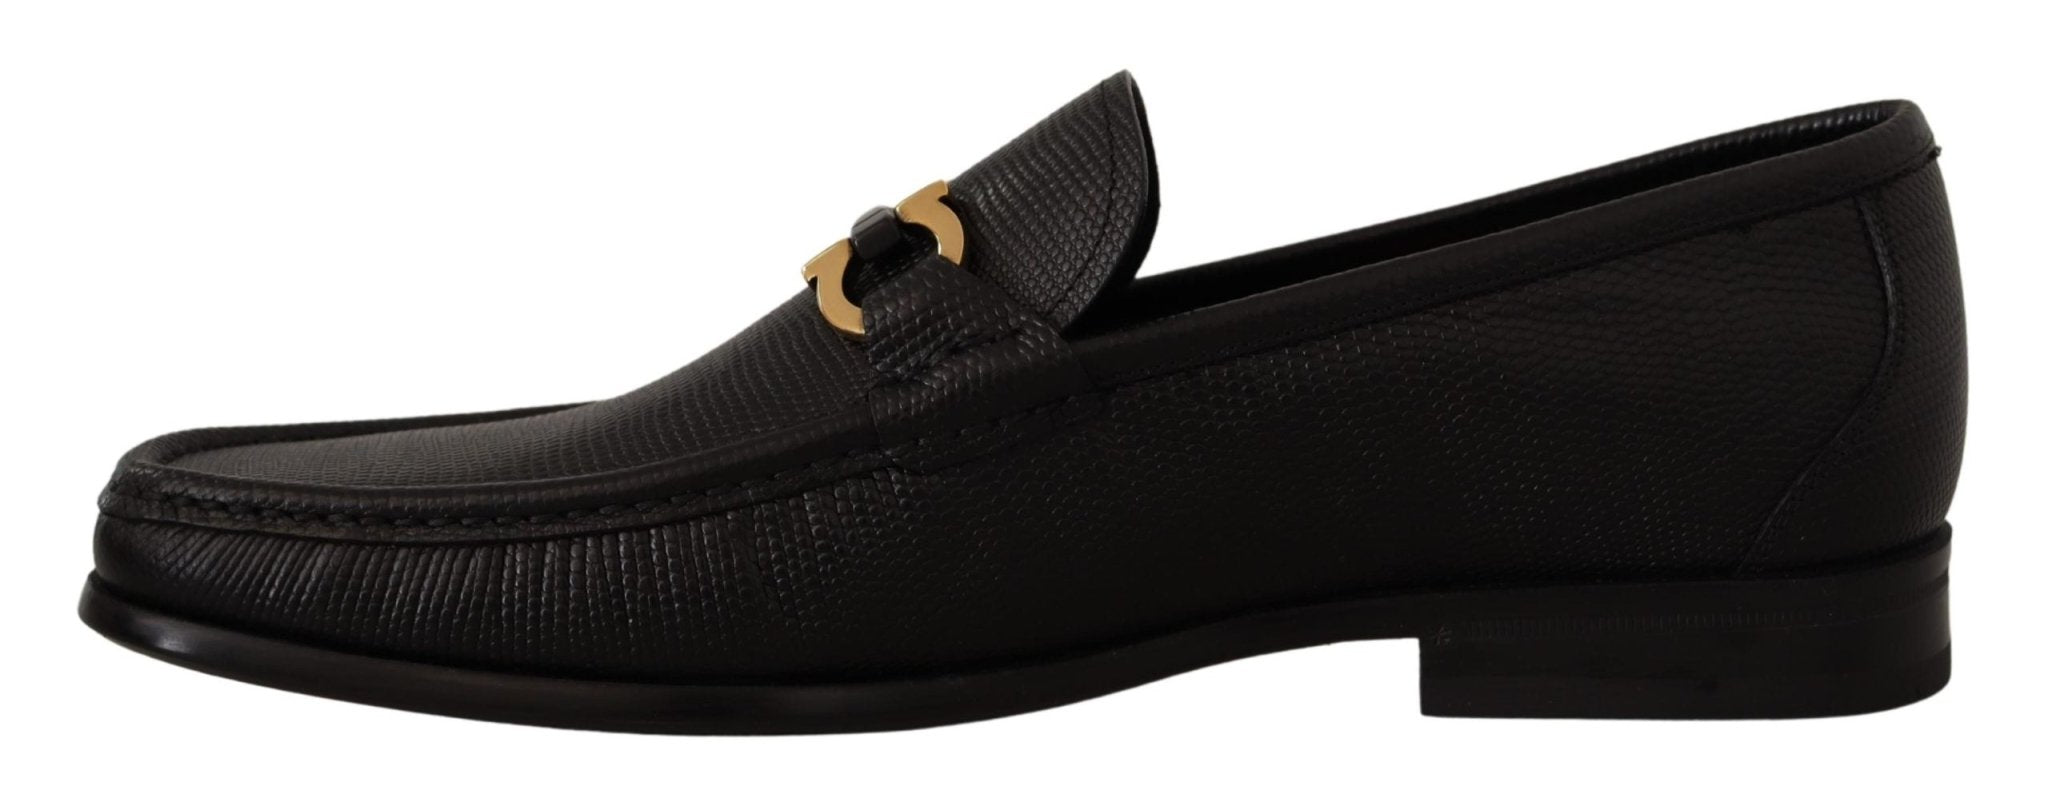 Salvatore Ferragamo Black Calf Leather Moccasins Loafers Shoes - Fizigo